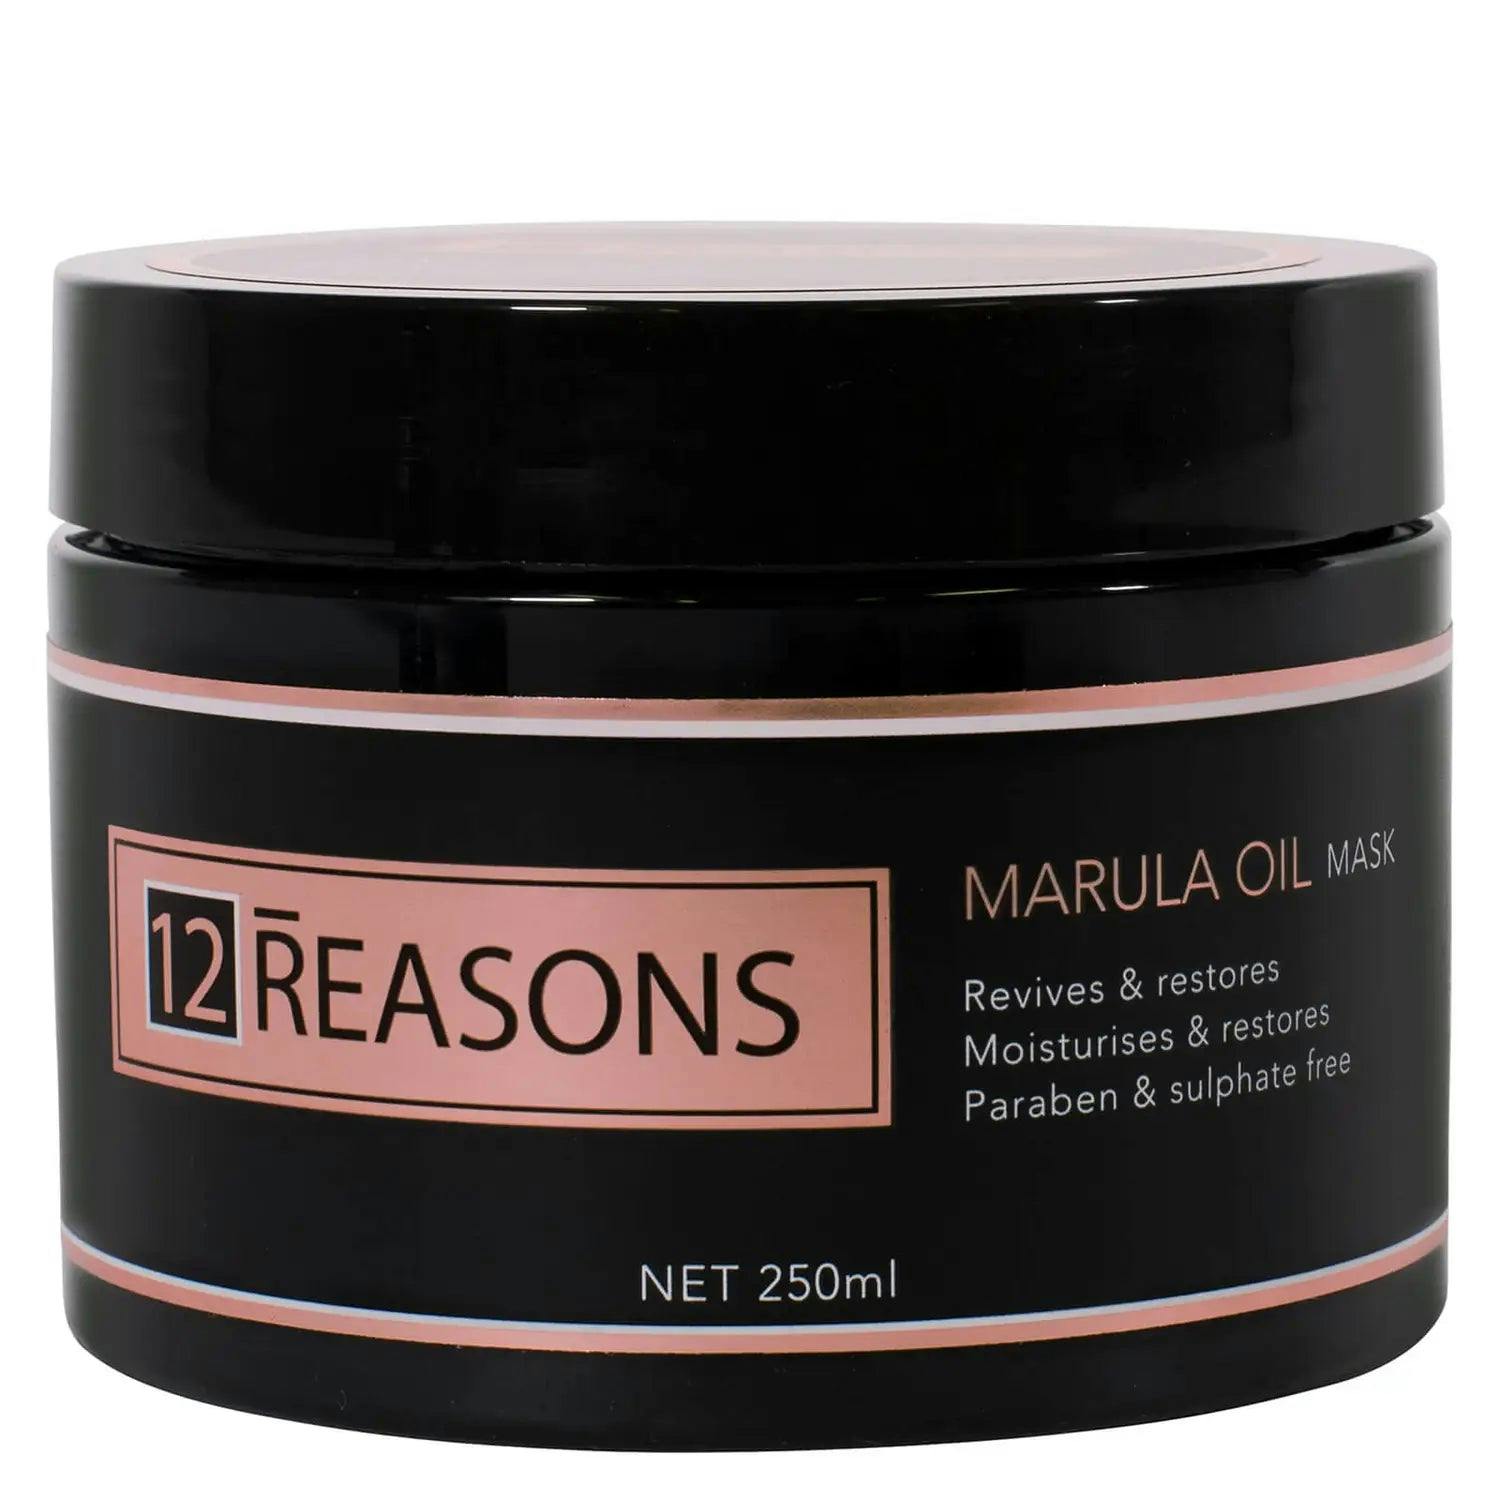 12Reasons Marula Oil Hair Mask 250ml